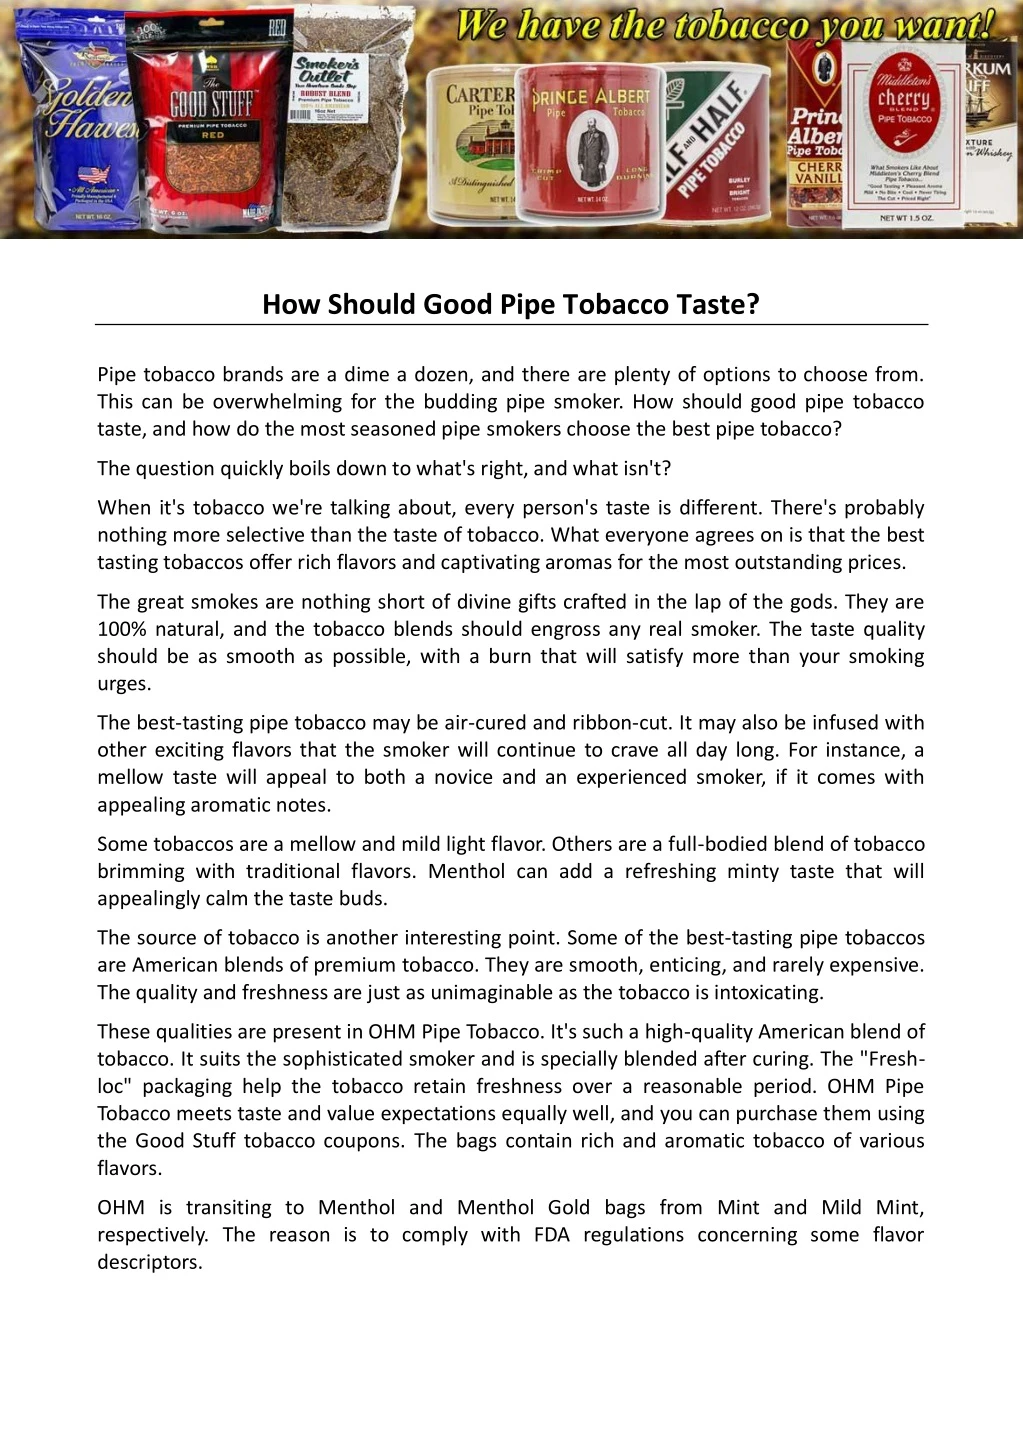 how should good pipe tobacco taste